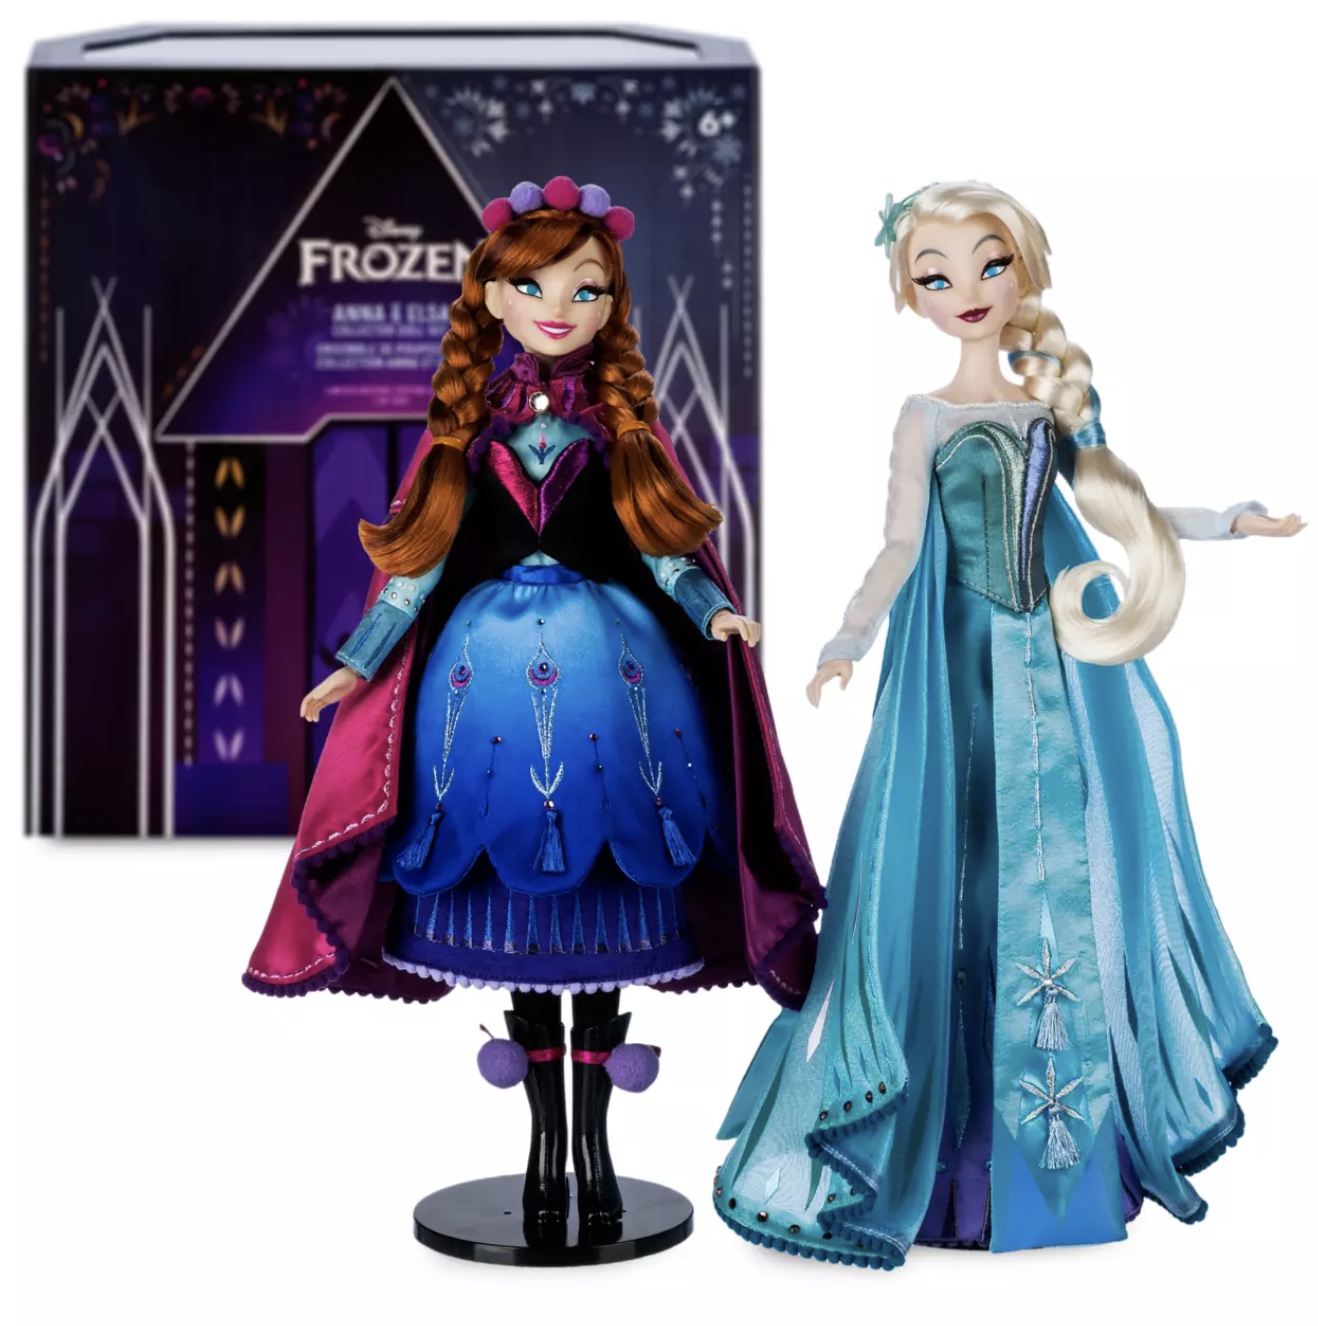 Frozen 2 Elsa Limited Edition Costume for Kids 